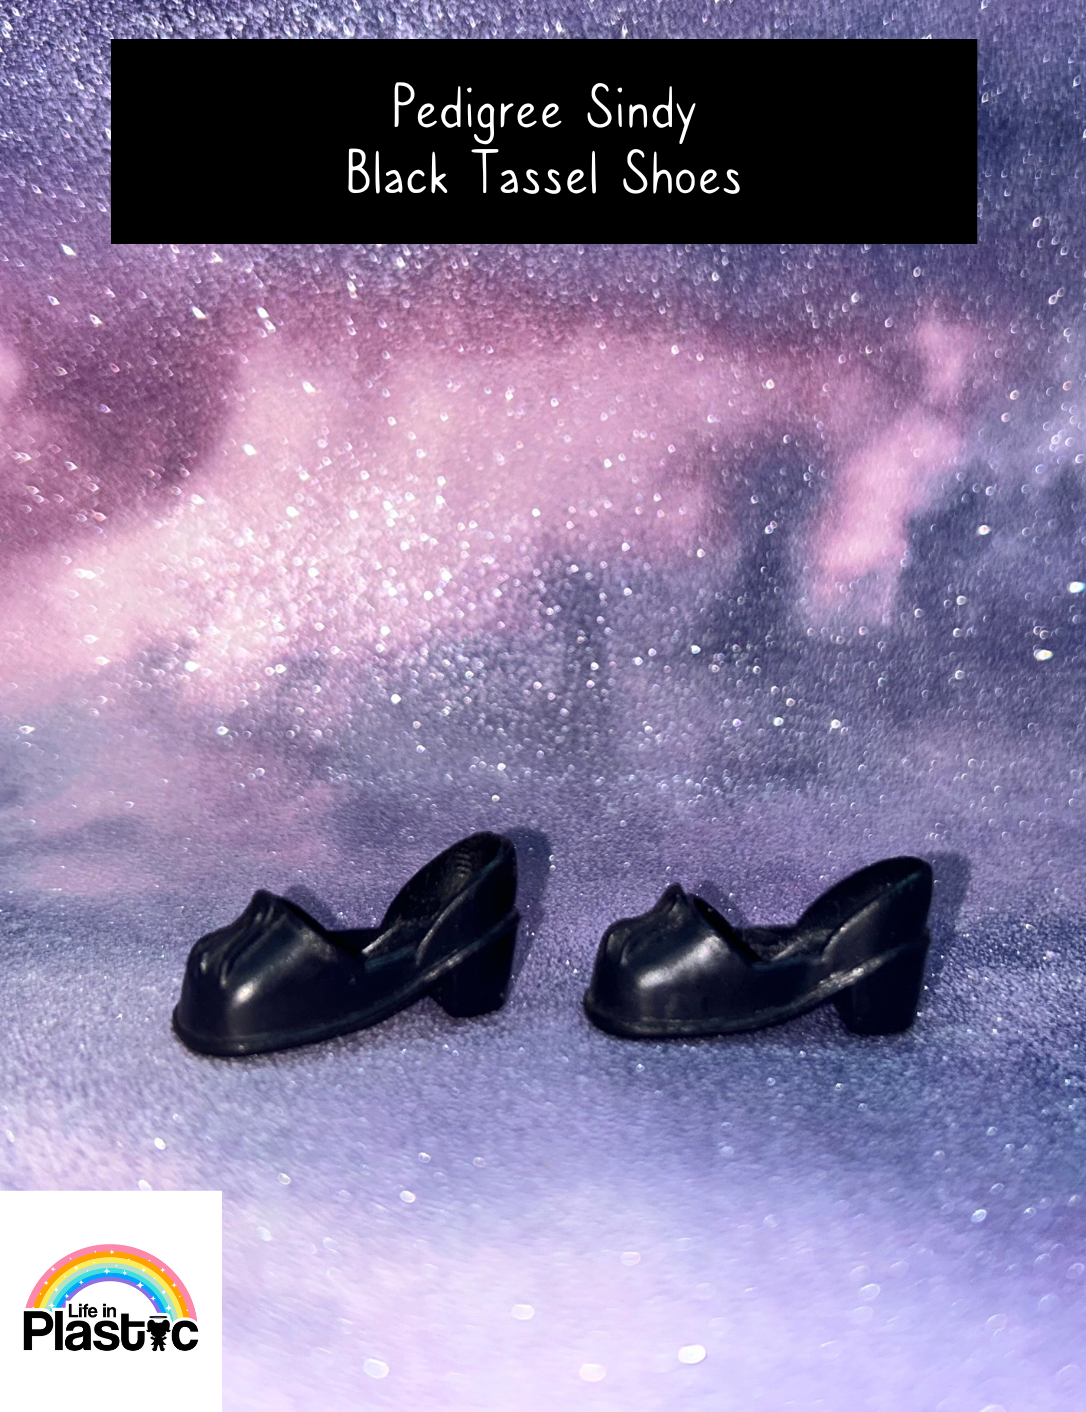 Pedigree Sindy Black Tassel Shoes